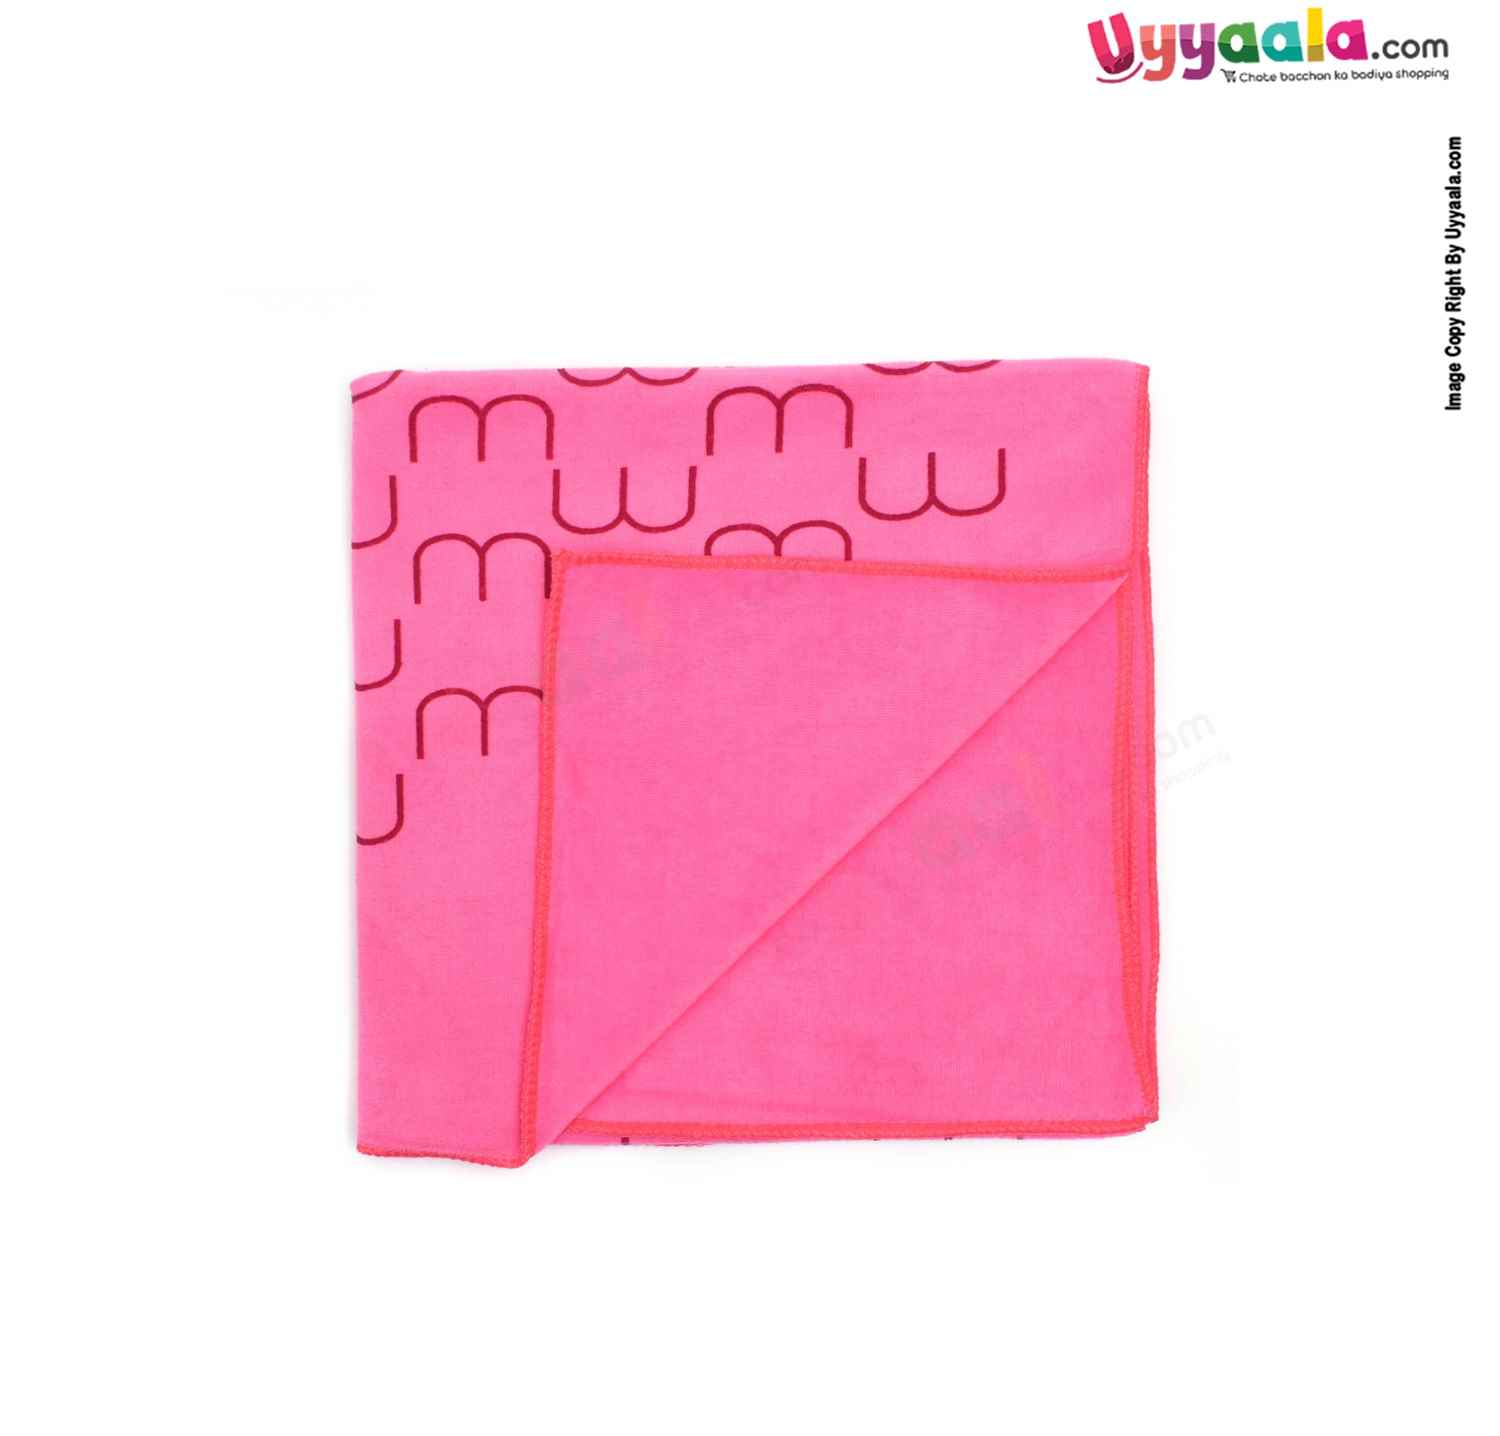 Soft Terry Bath Towel Premium with Rabbit Print for Babies 0-36m Age, Size (143*75cm)- Pink